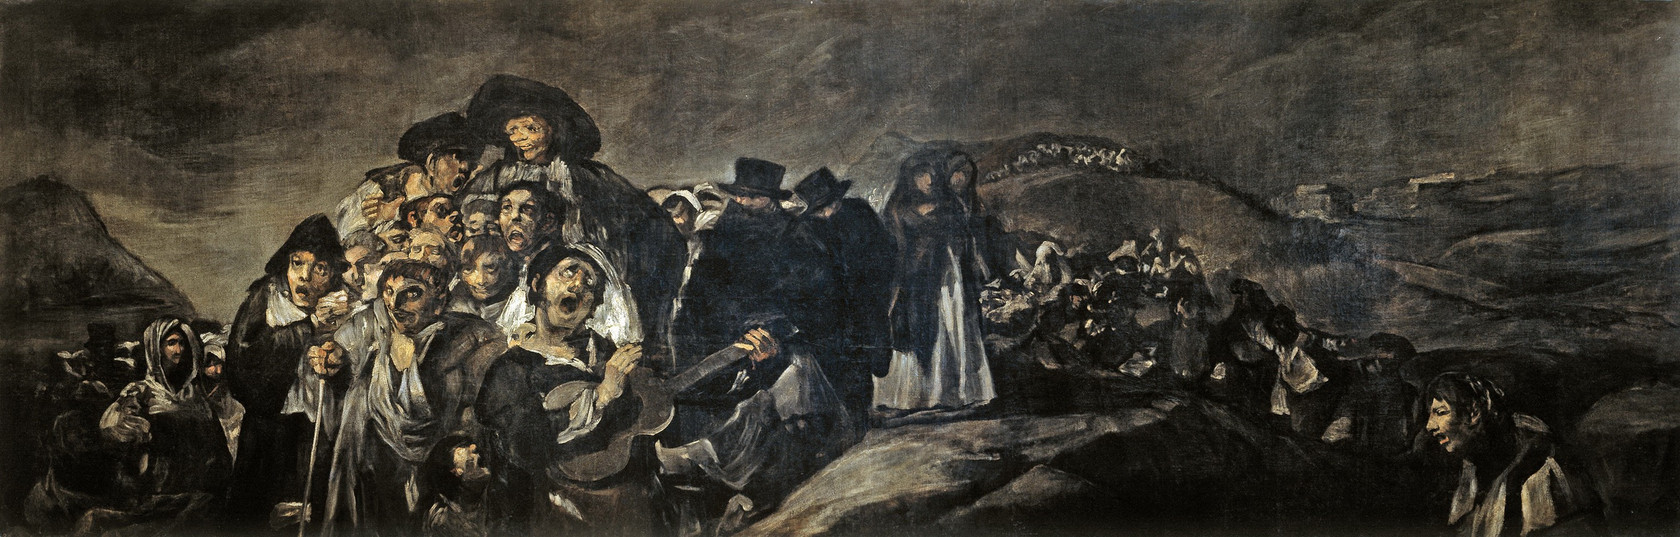 Картина - Паломничество к св. Исидору, 1820 - 1823